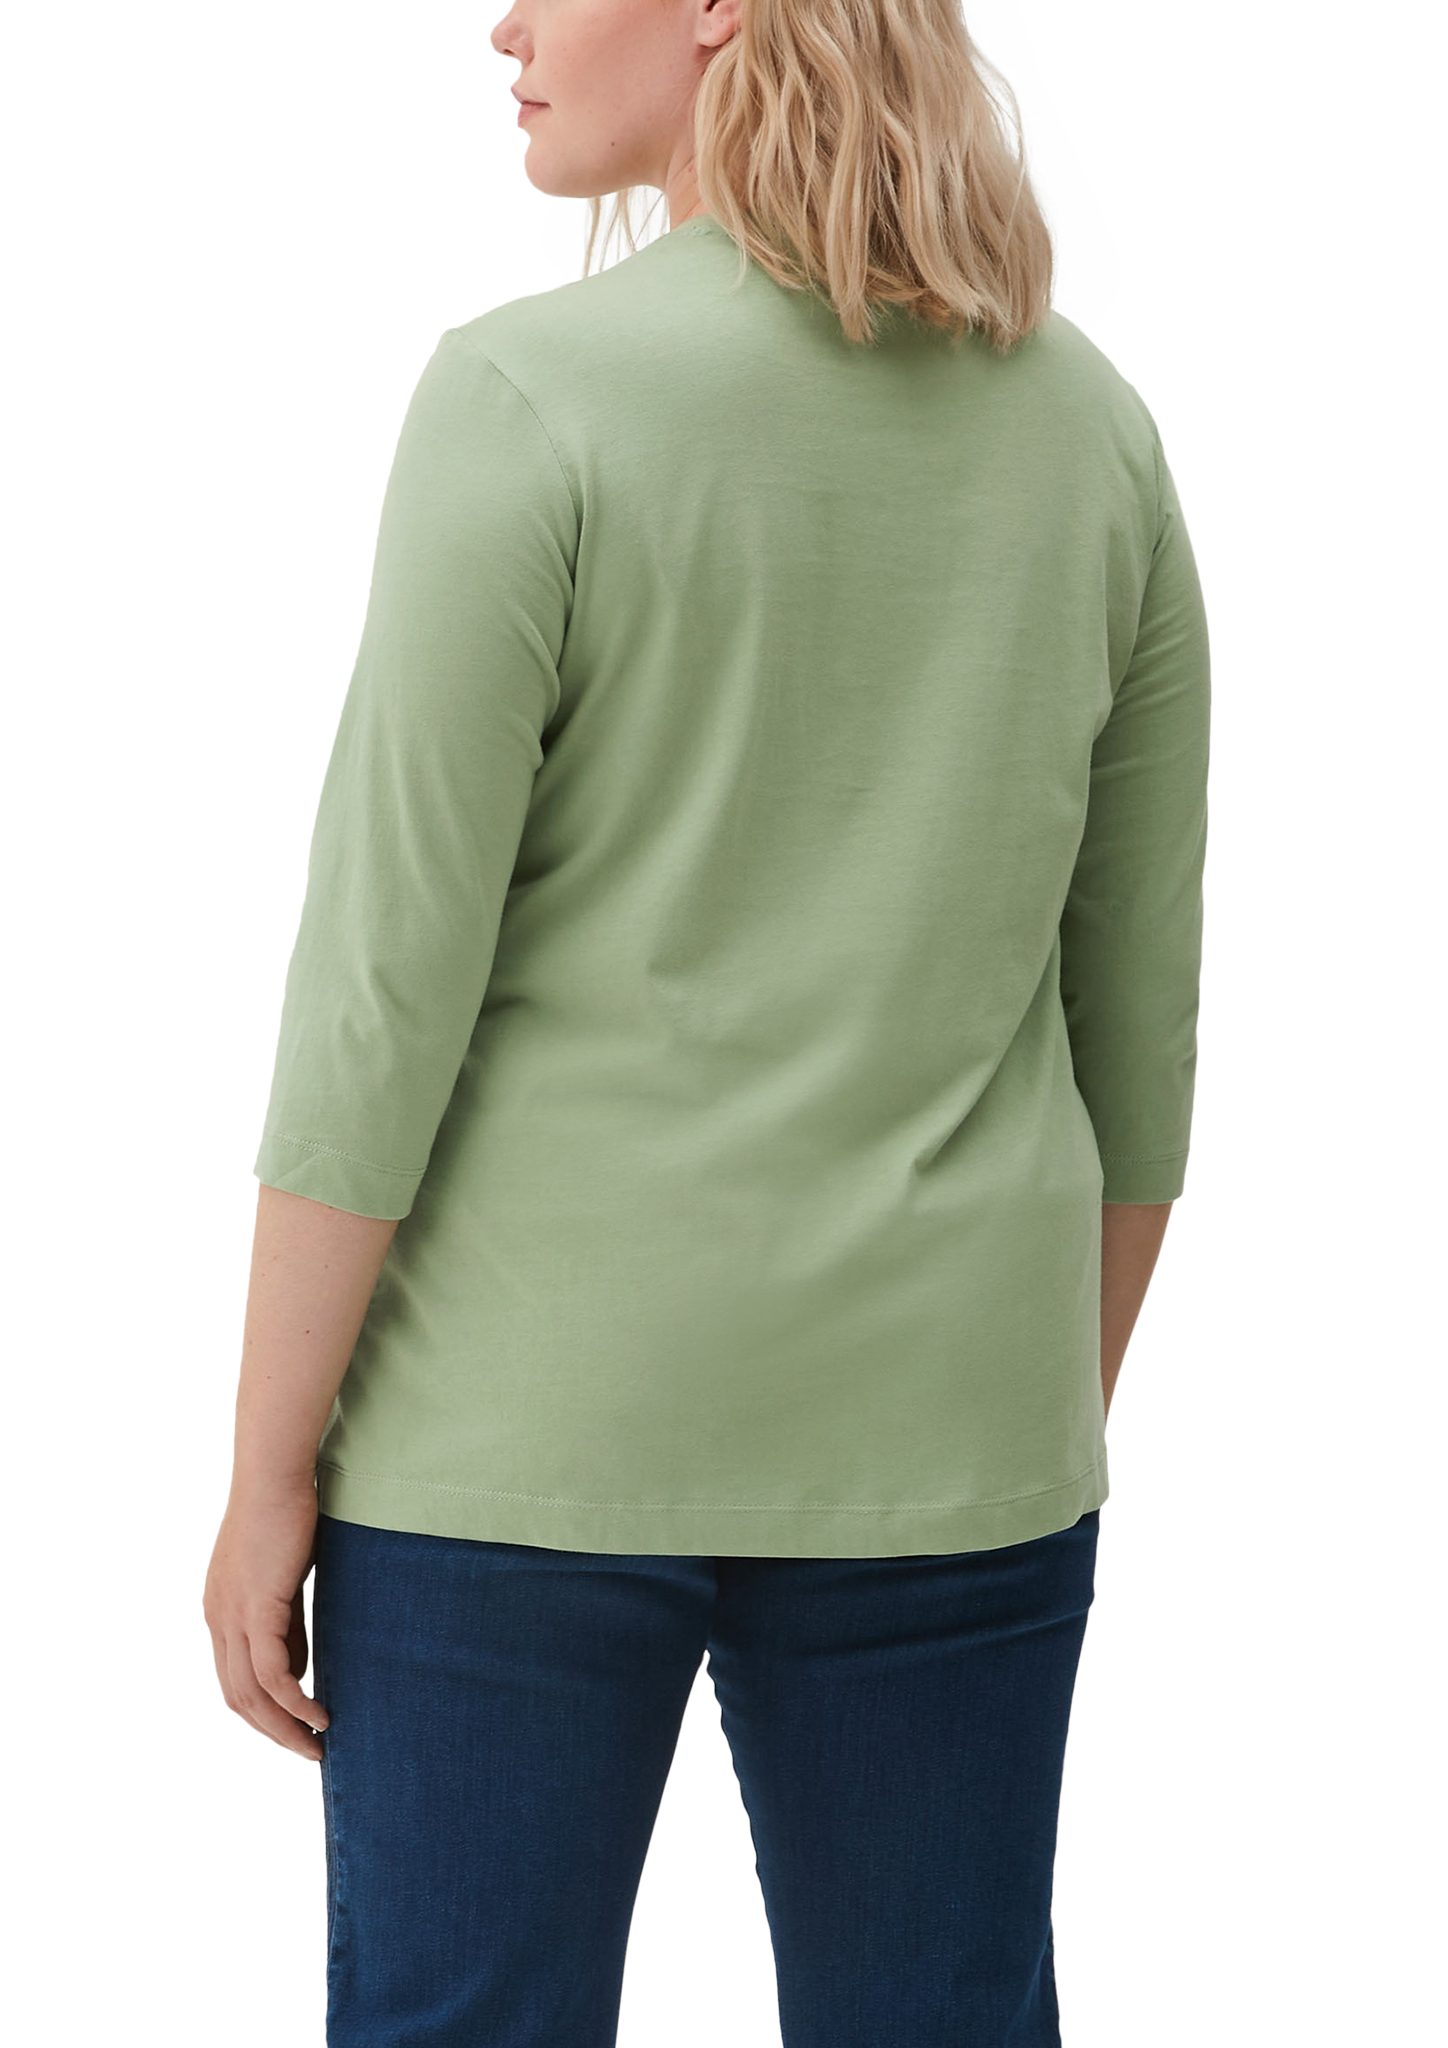 Jerseyshirt mit Print-Detail hellgrün TRIANGLE 3/4-Arm-Shirt